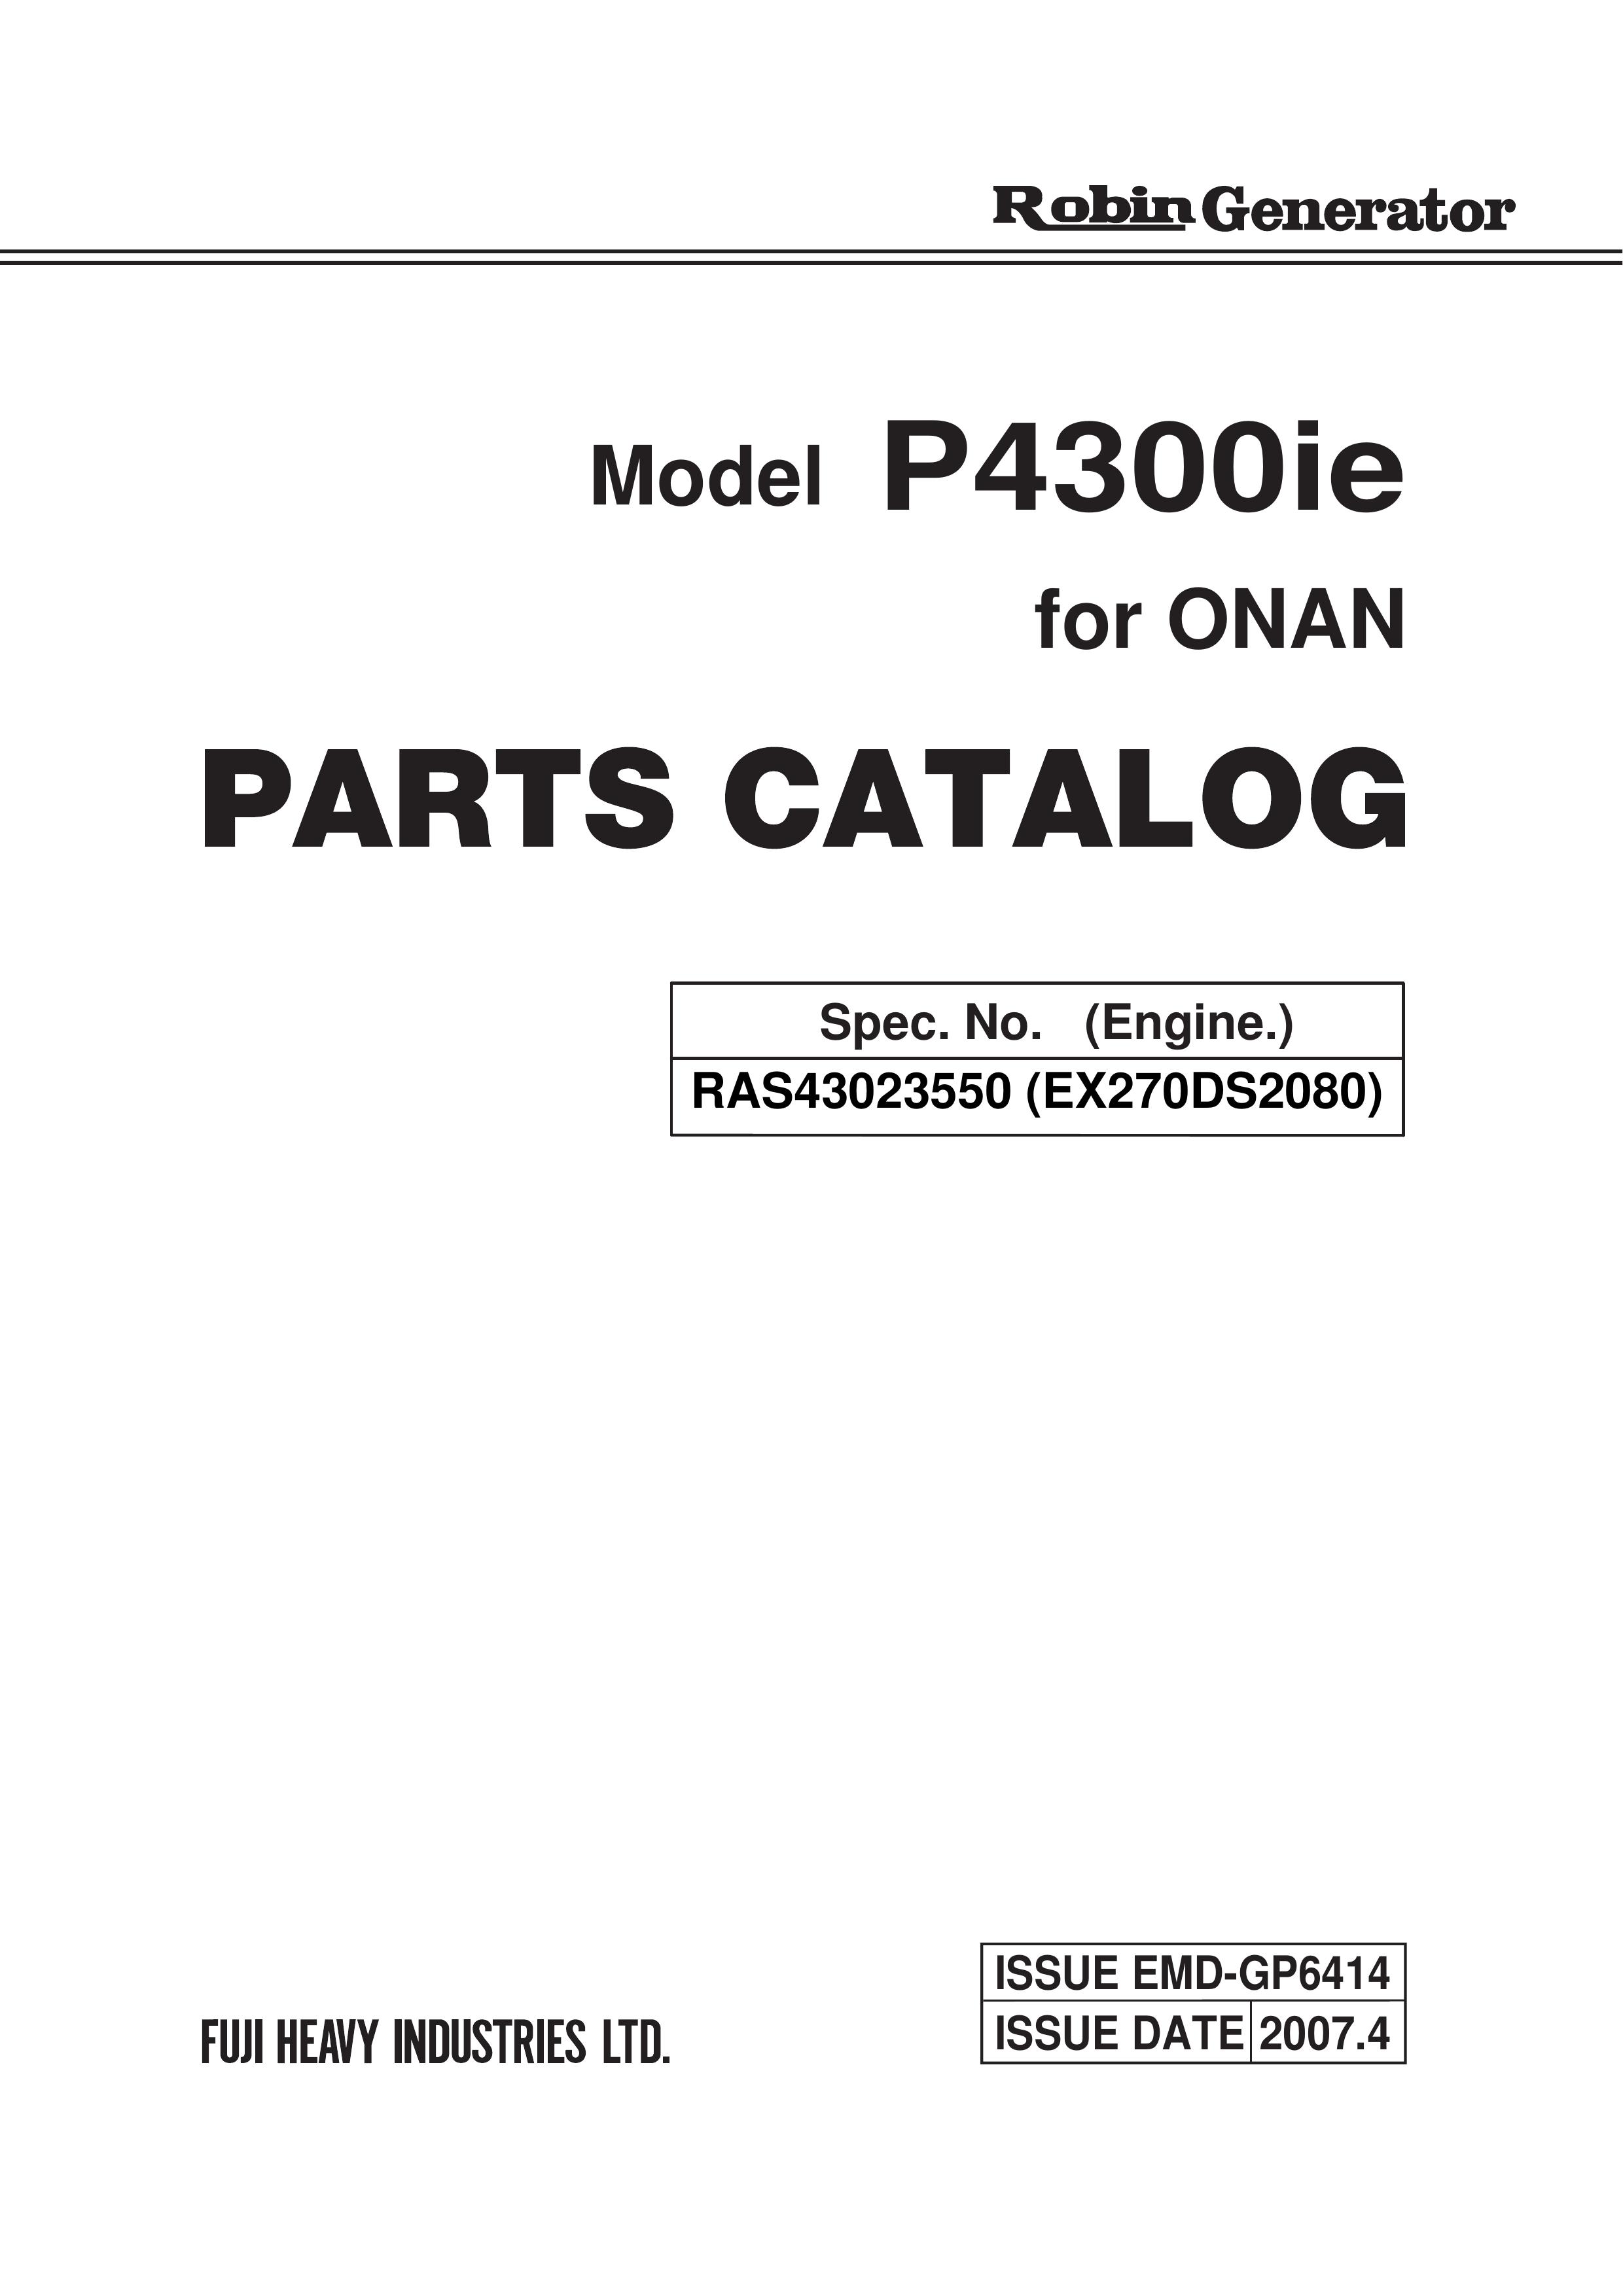 Subaru Robin Power Products P4300ie Portable Generator User Manual